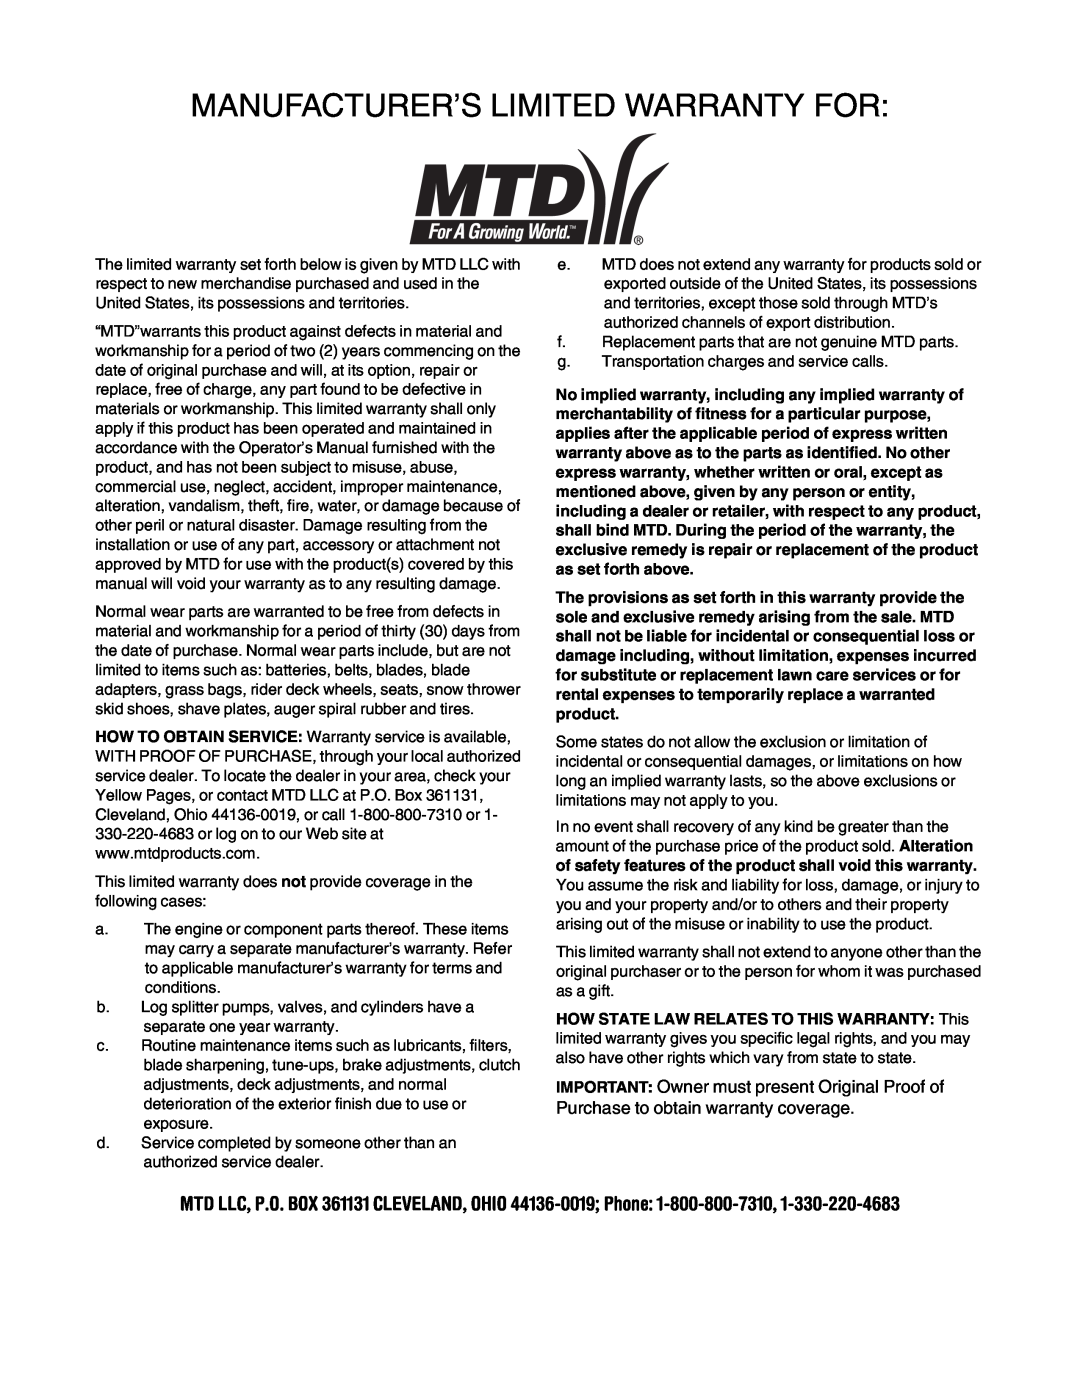 MTD 020 manual Manufacturer’S Limited Warranty For 